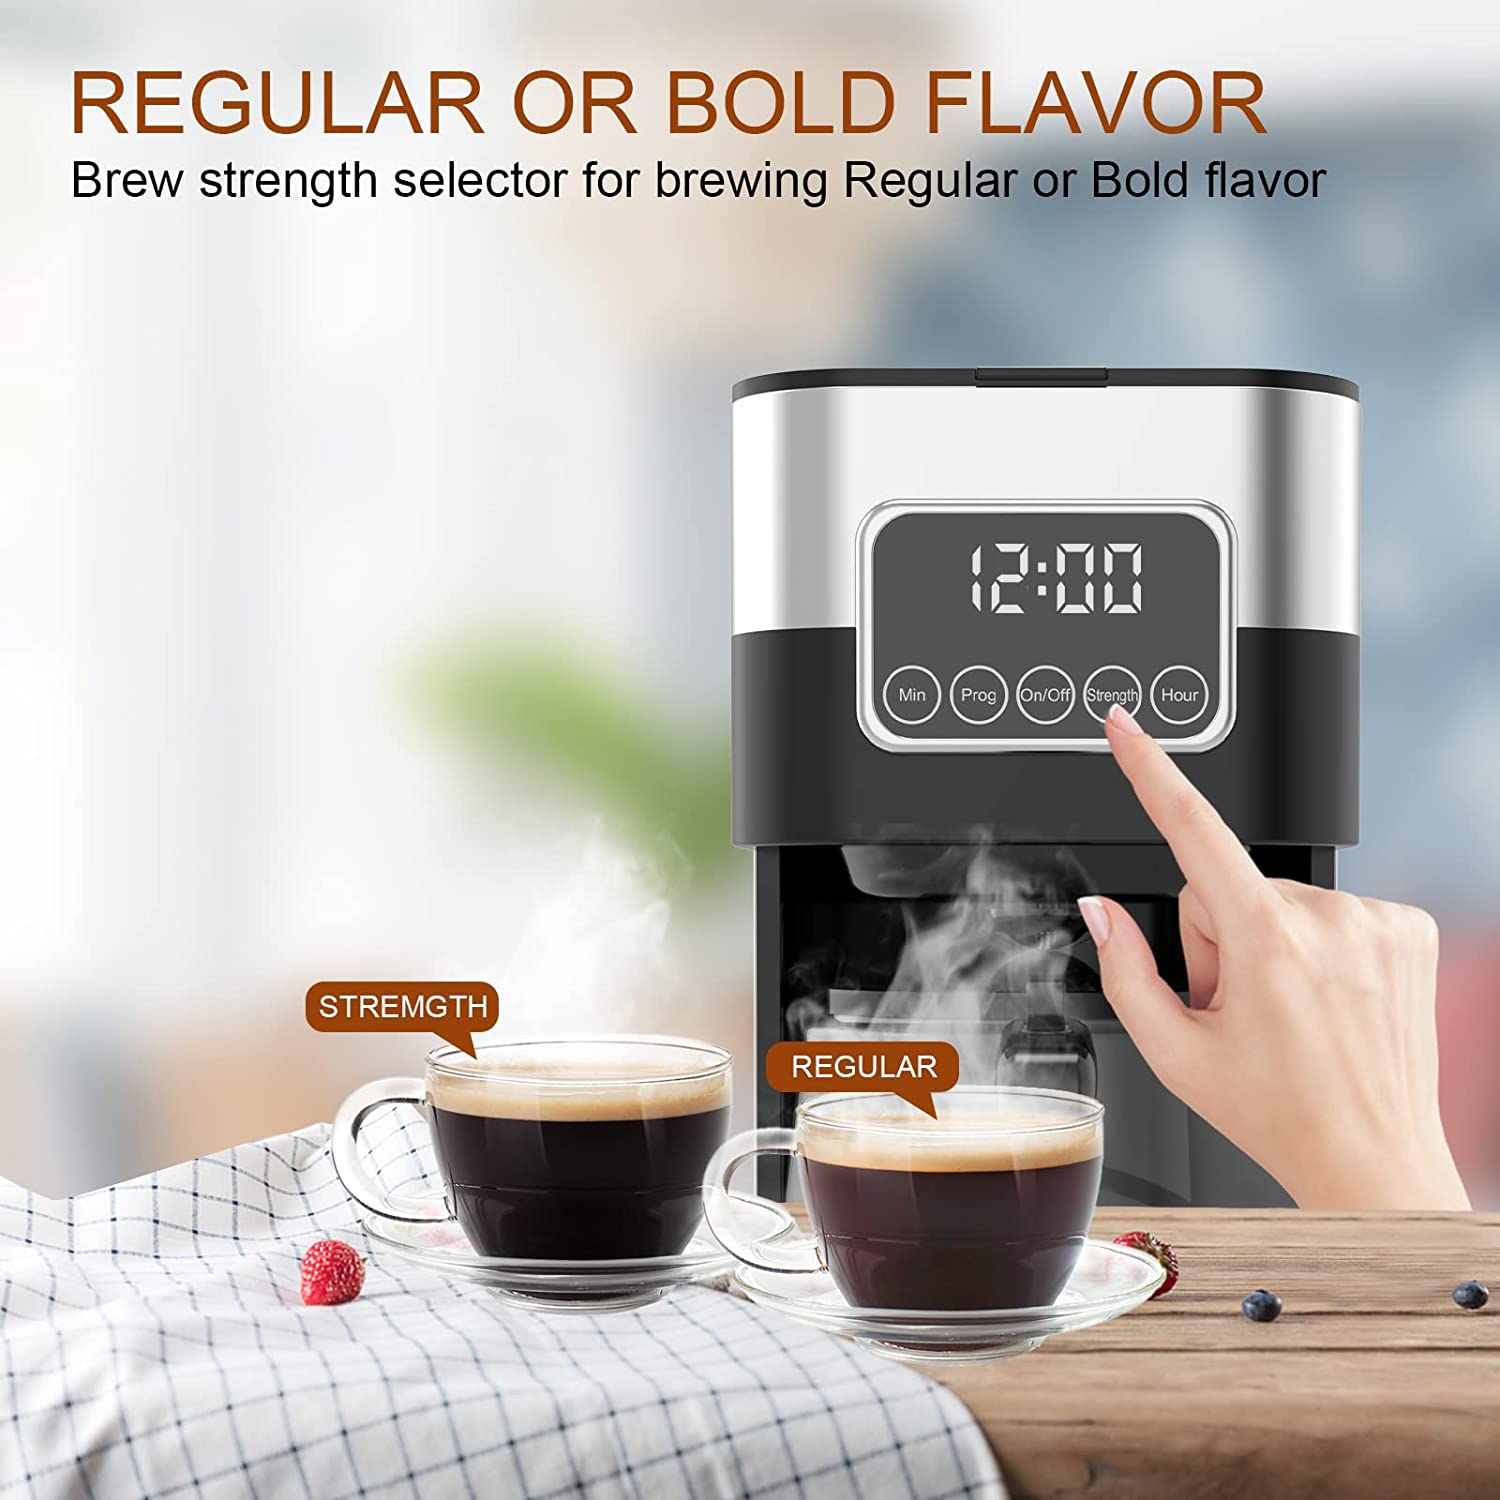 BOSCARE Coffee Maker 12 Cup Programmable Drip Coffee Machine